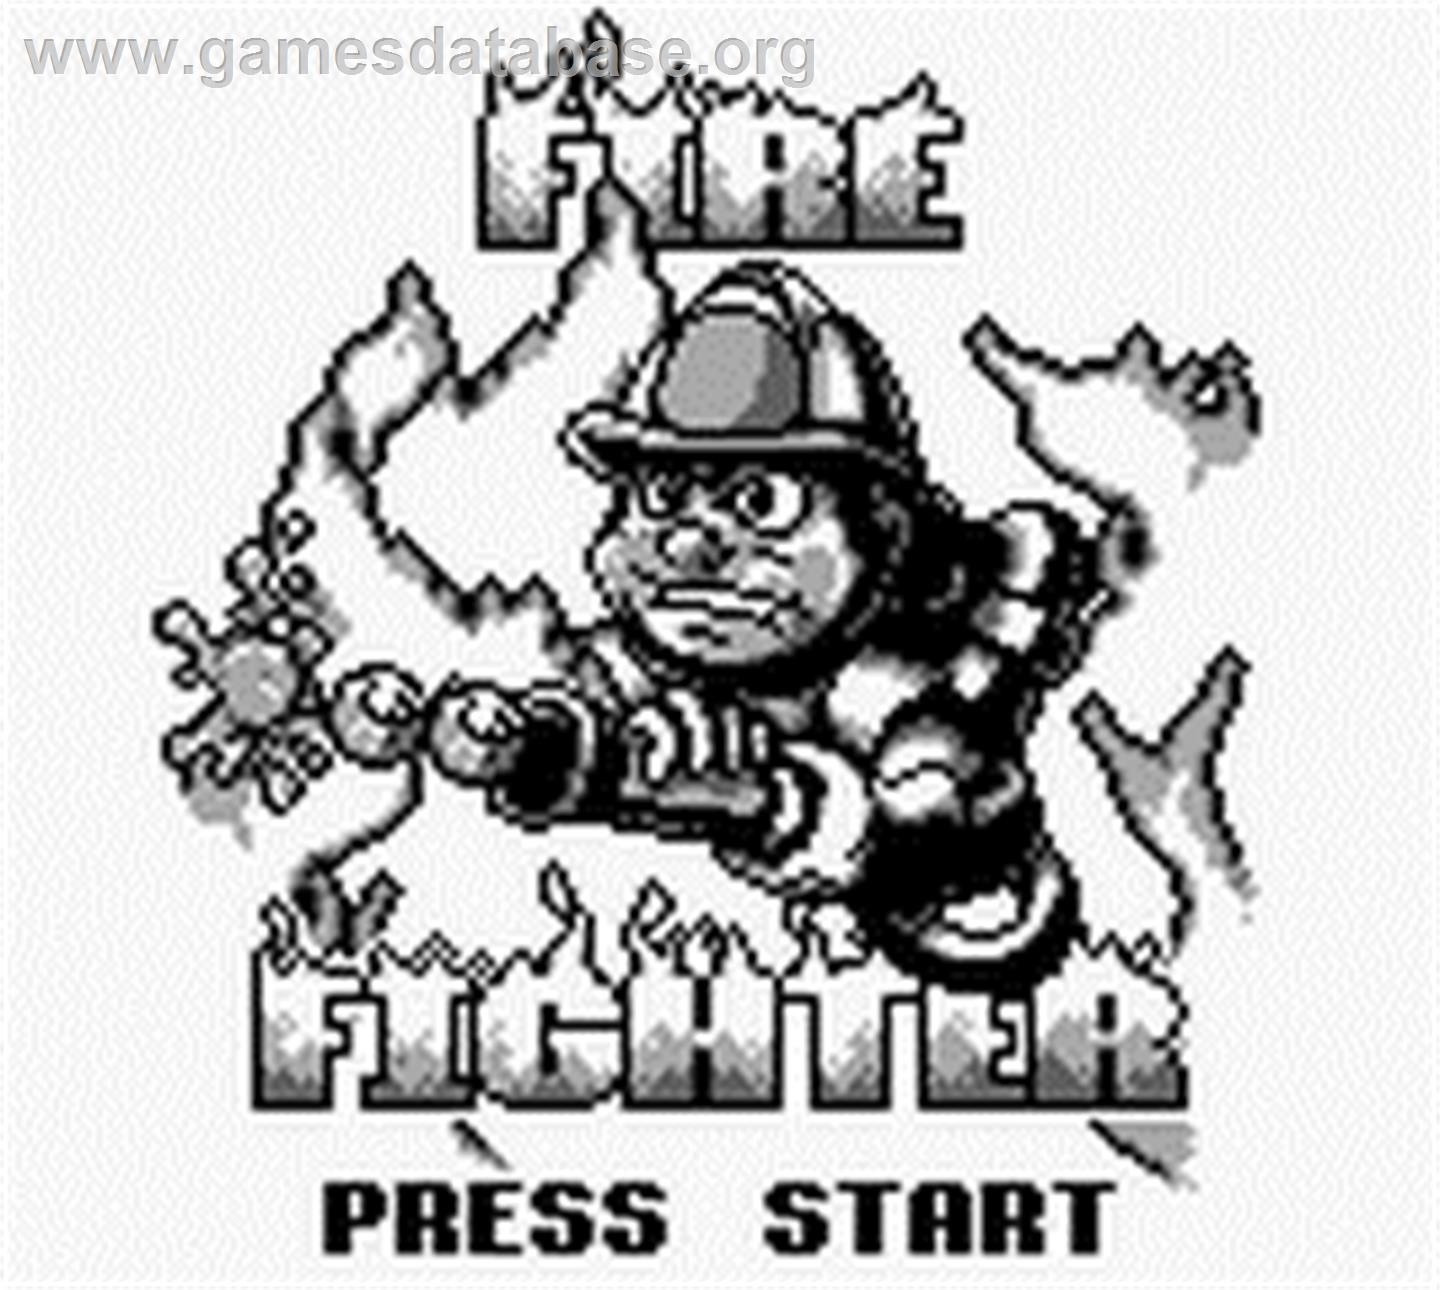 Fire Fighter - Nintendo Game Boy - Artwork - Title Screen